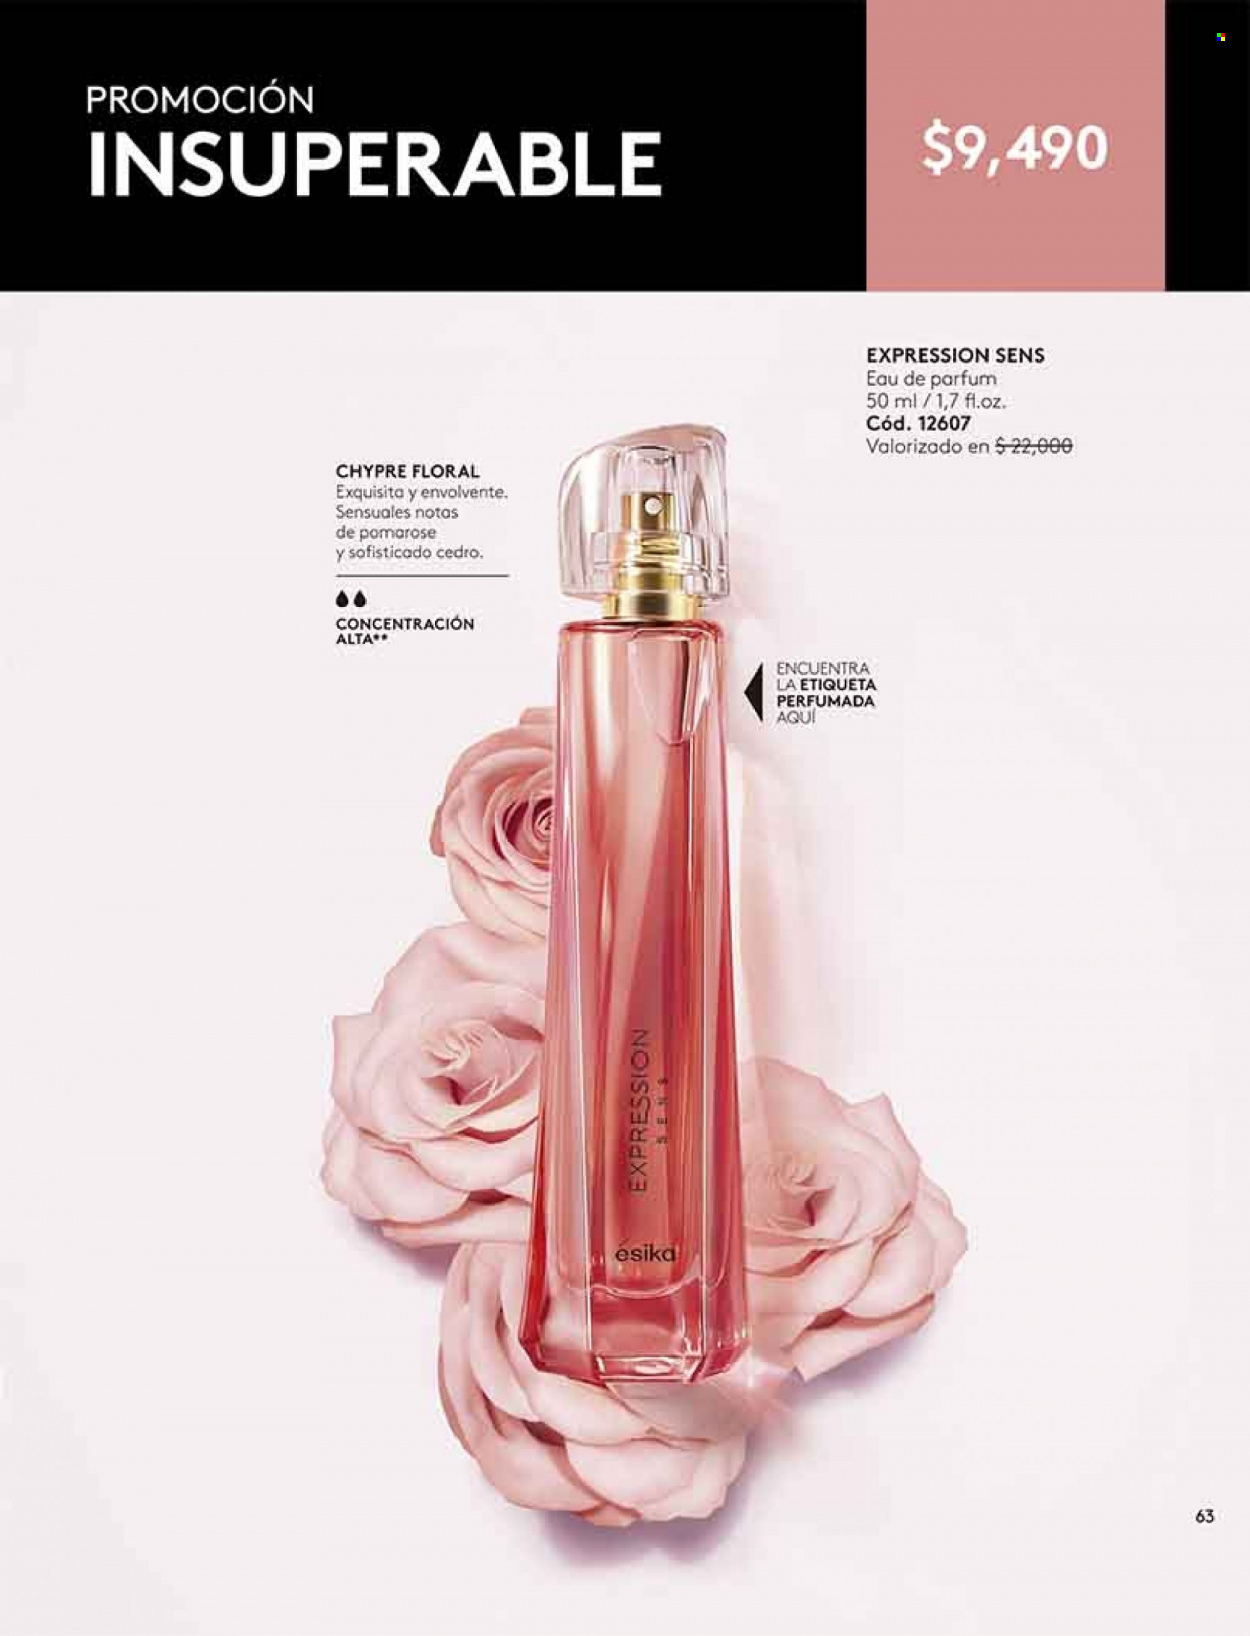 Catálogo Ésika - Ventas - perfume. Página 63.